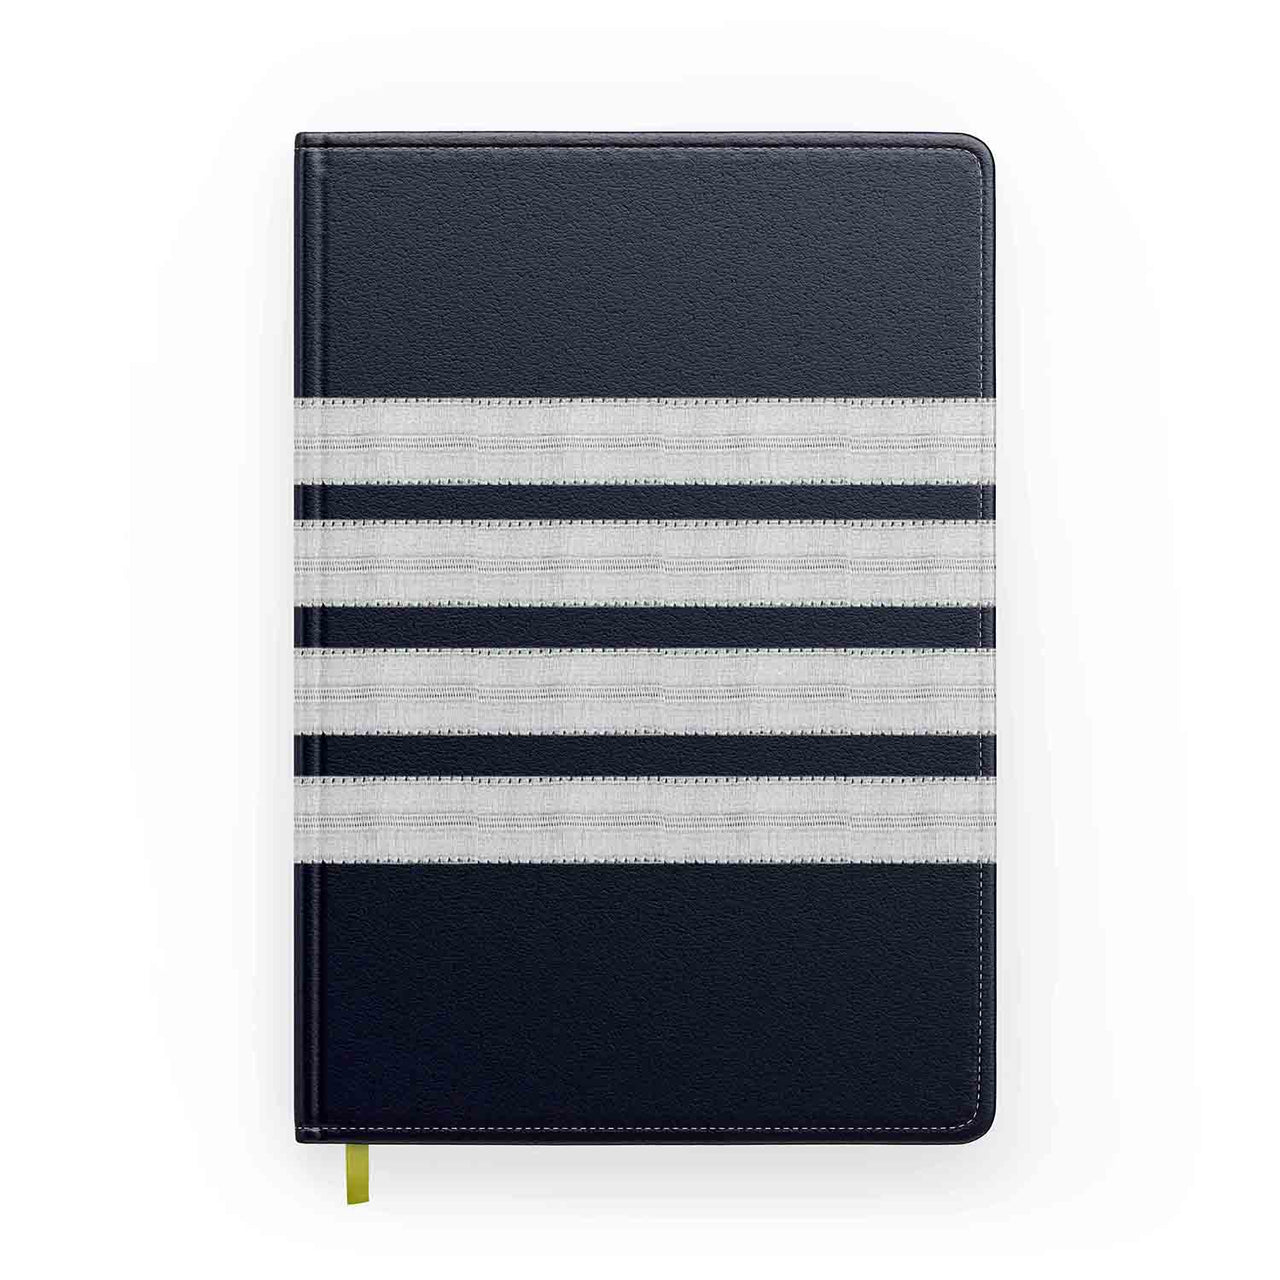 Customizable Name & "SILVER" Pilot Epaulette (4,3,2 Lines) Designed Notebooks